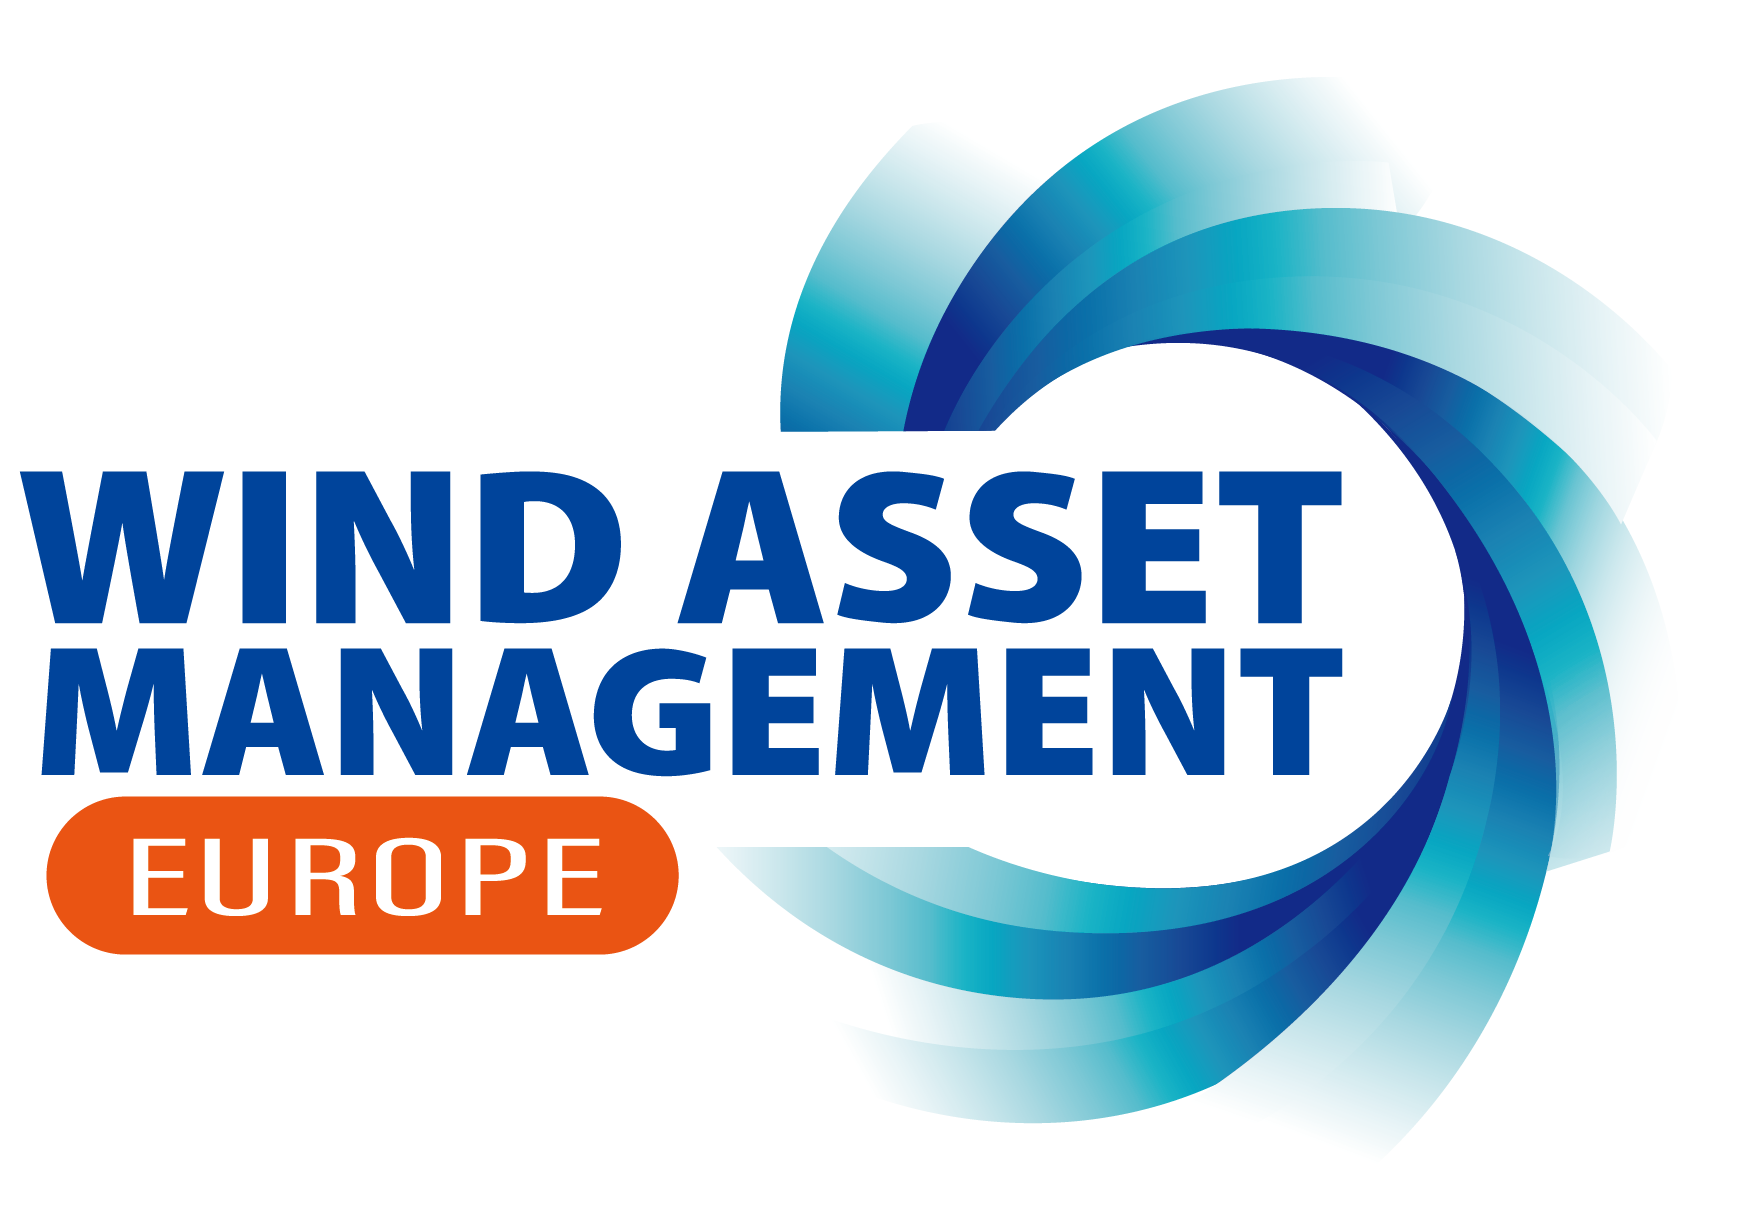 Wind Asset Management Europe 2020 organized by Leader Associates